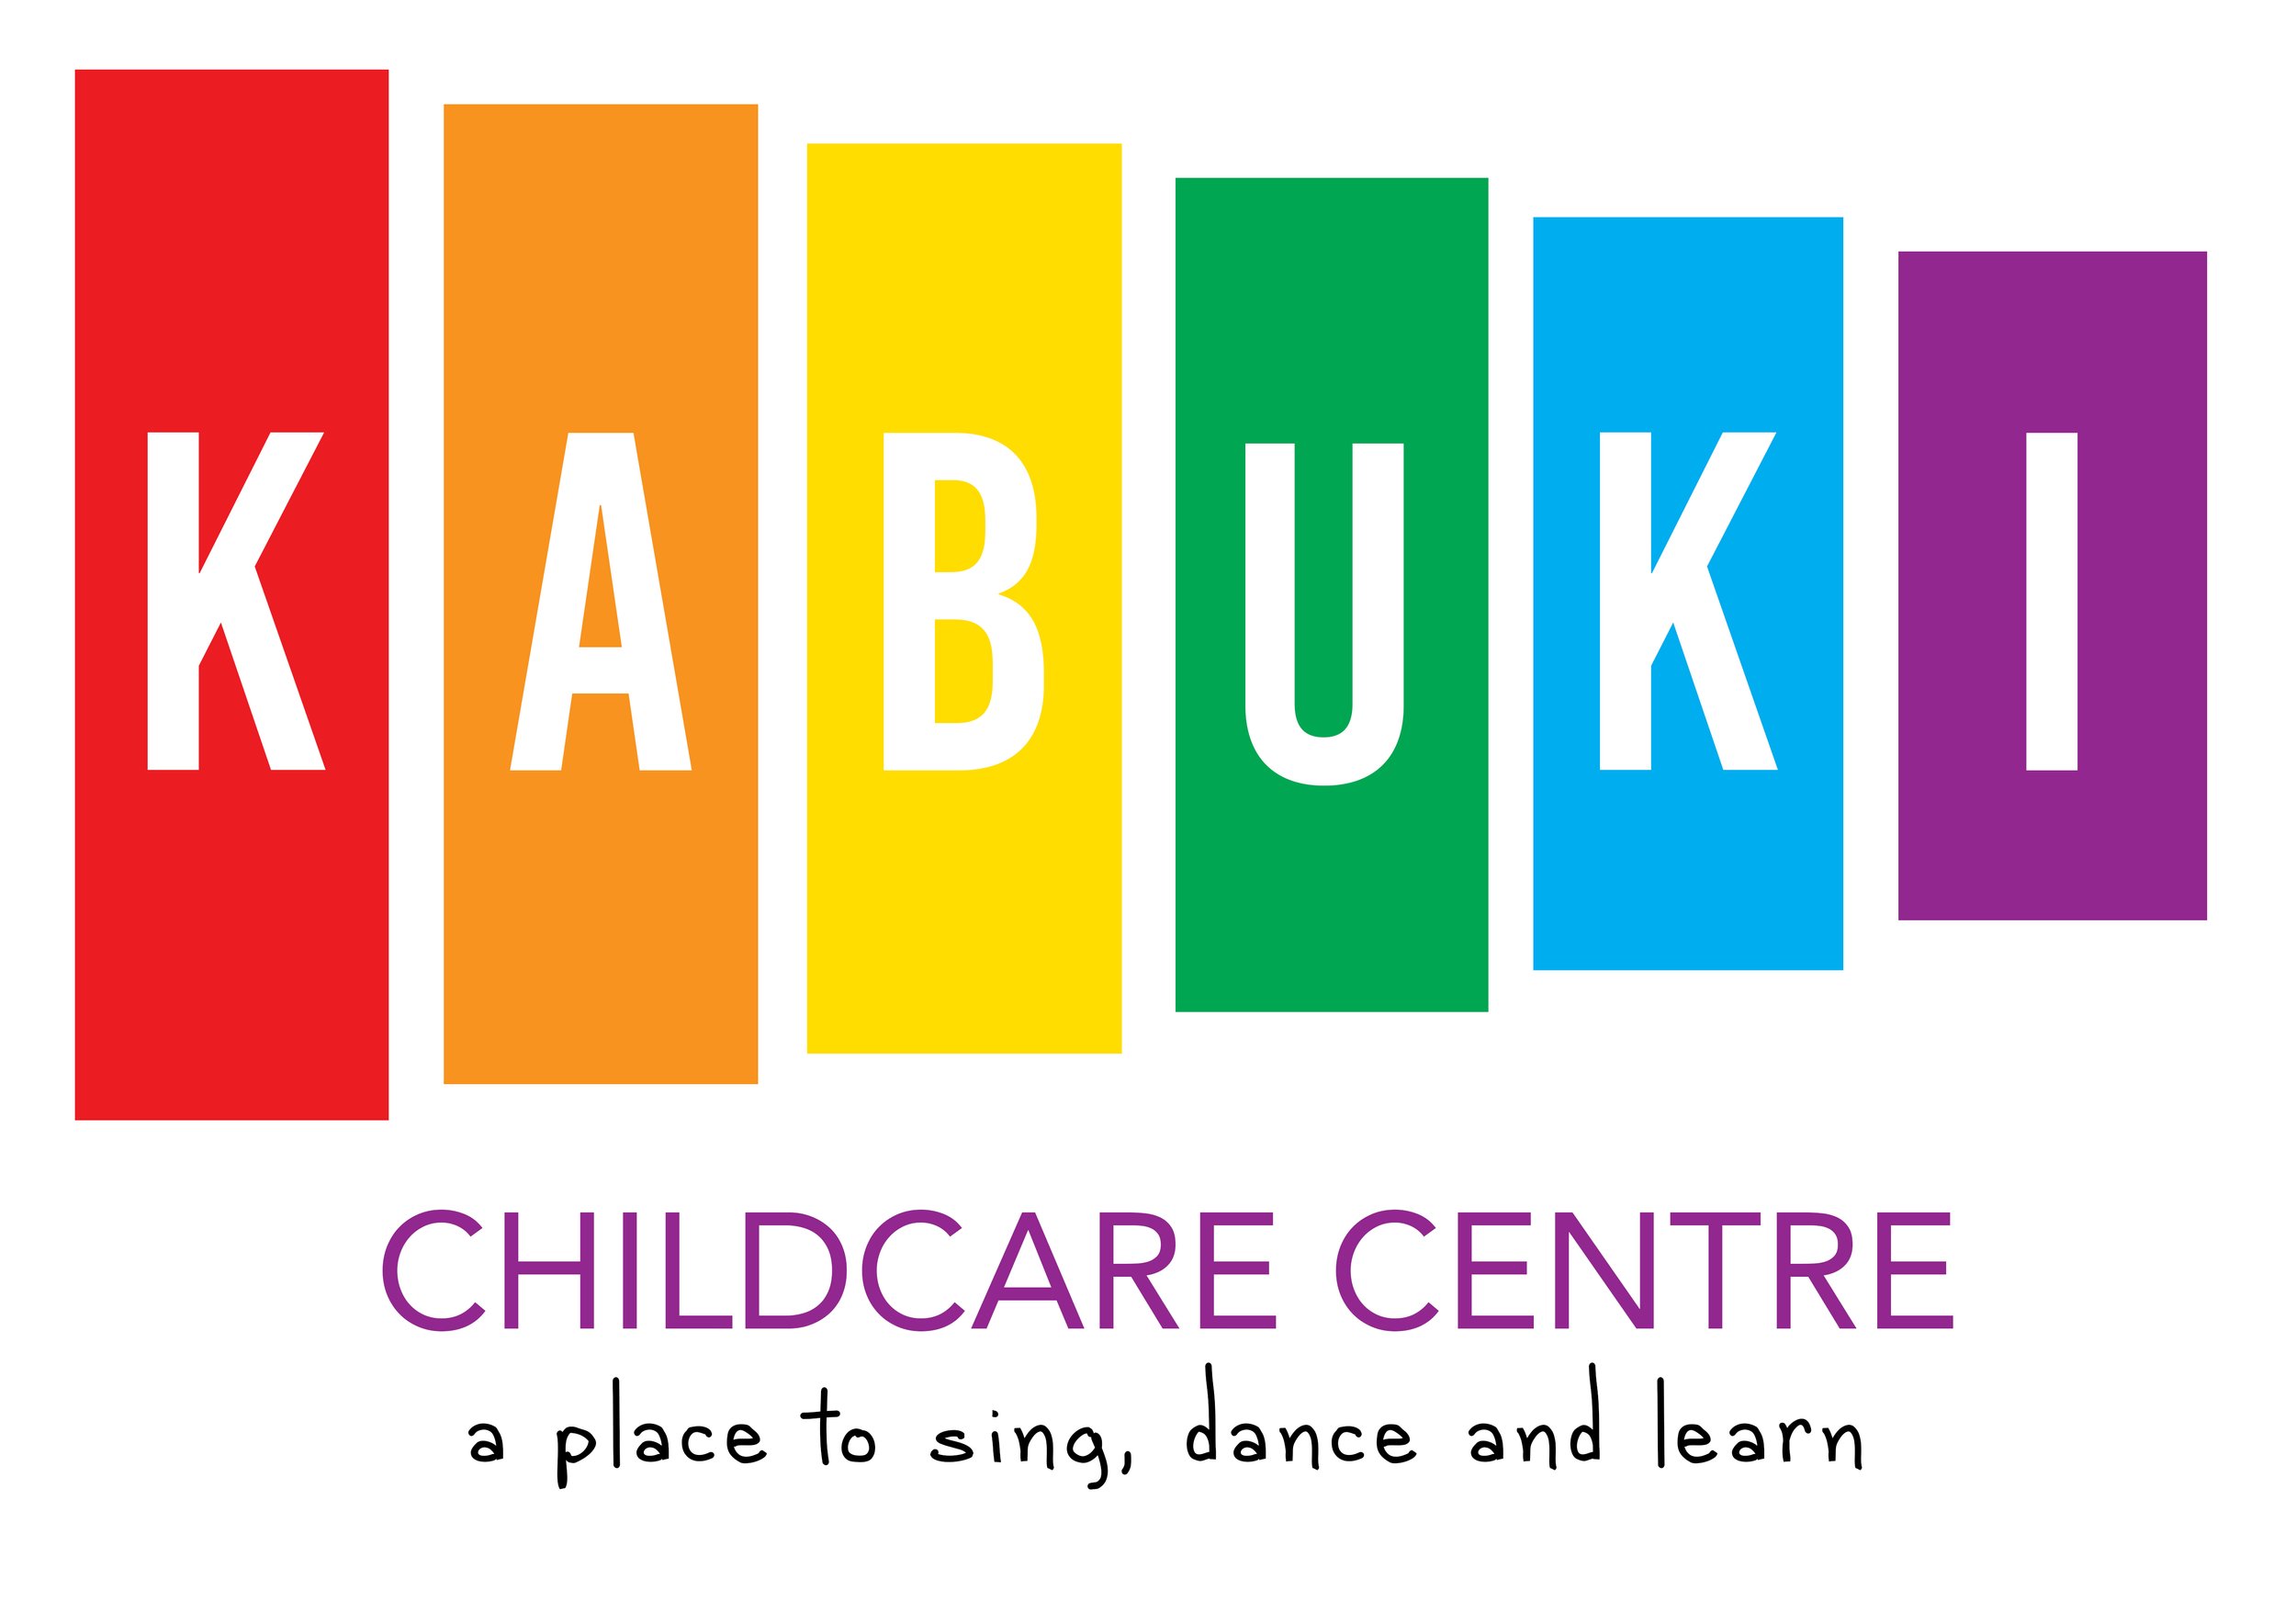 Kabuki Childcare Centre